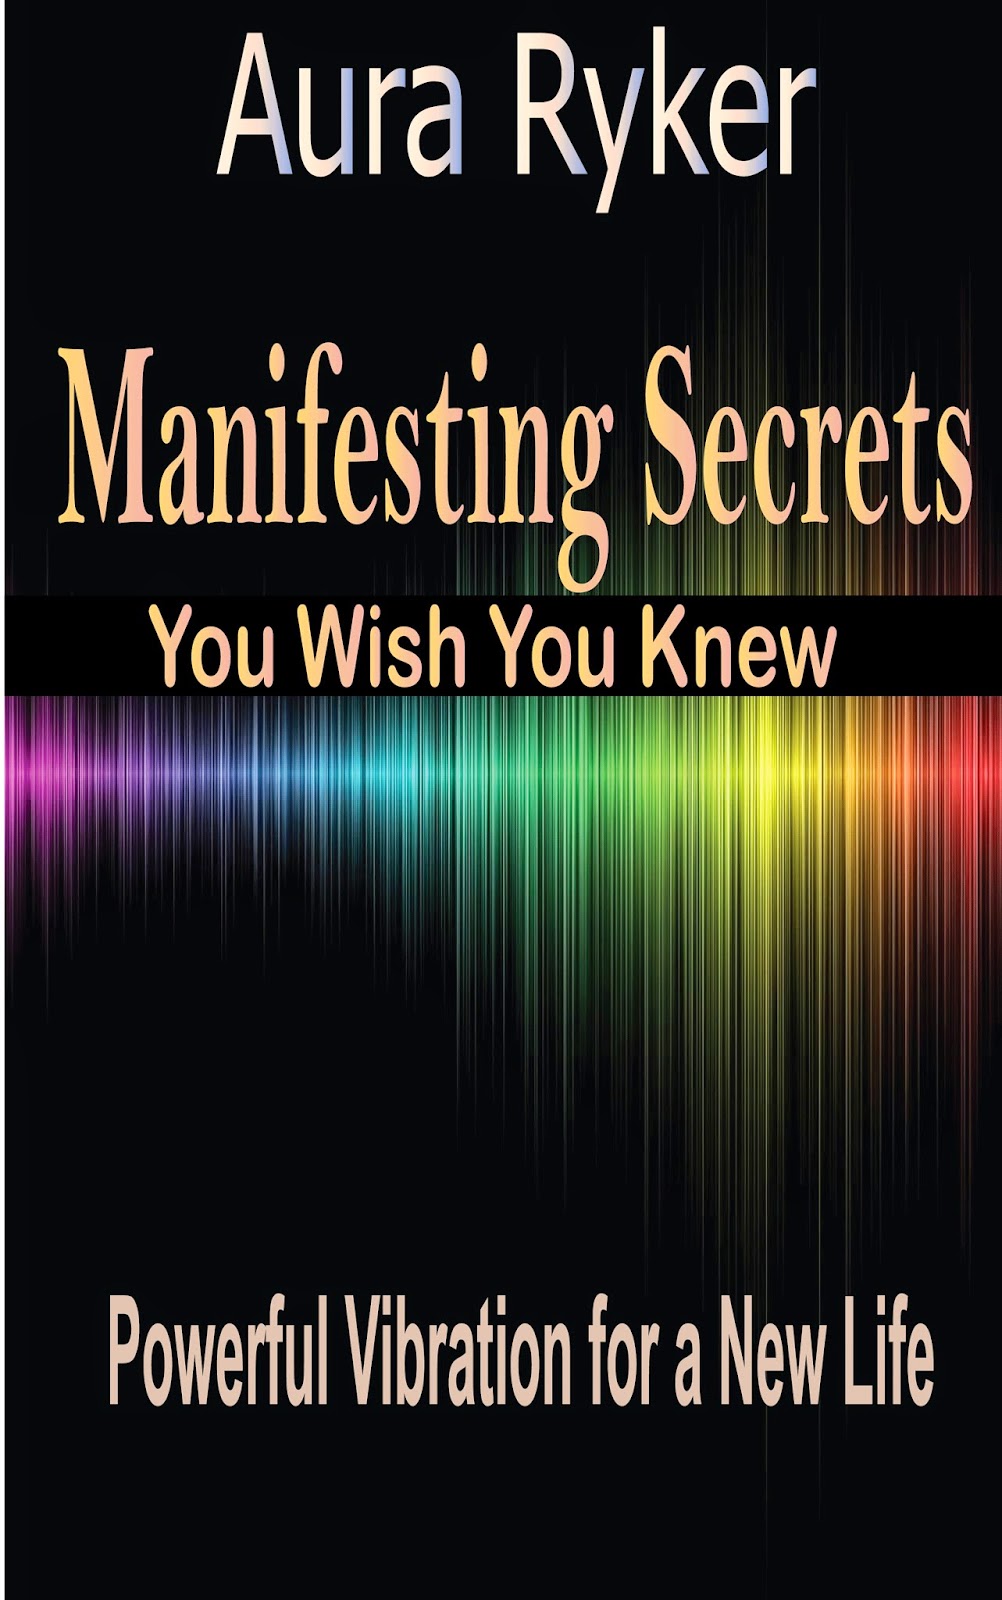 FREE: Manifesting Secrets You Wish You Knew by aura ryker